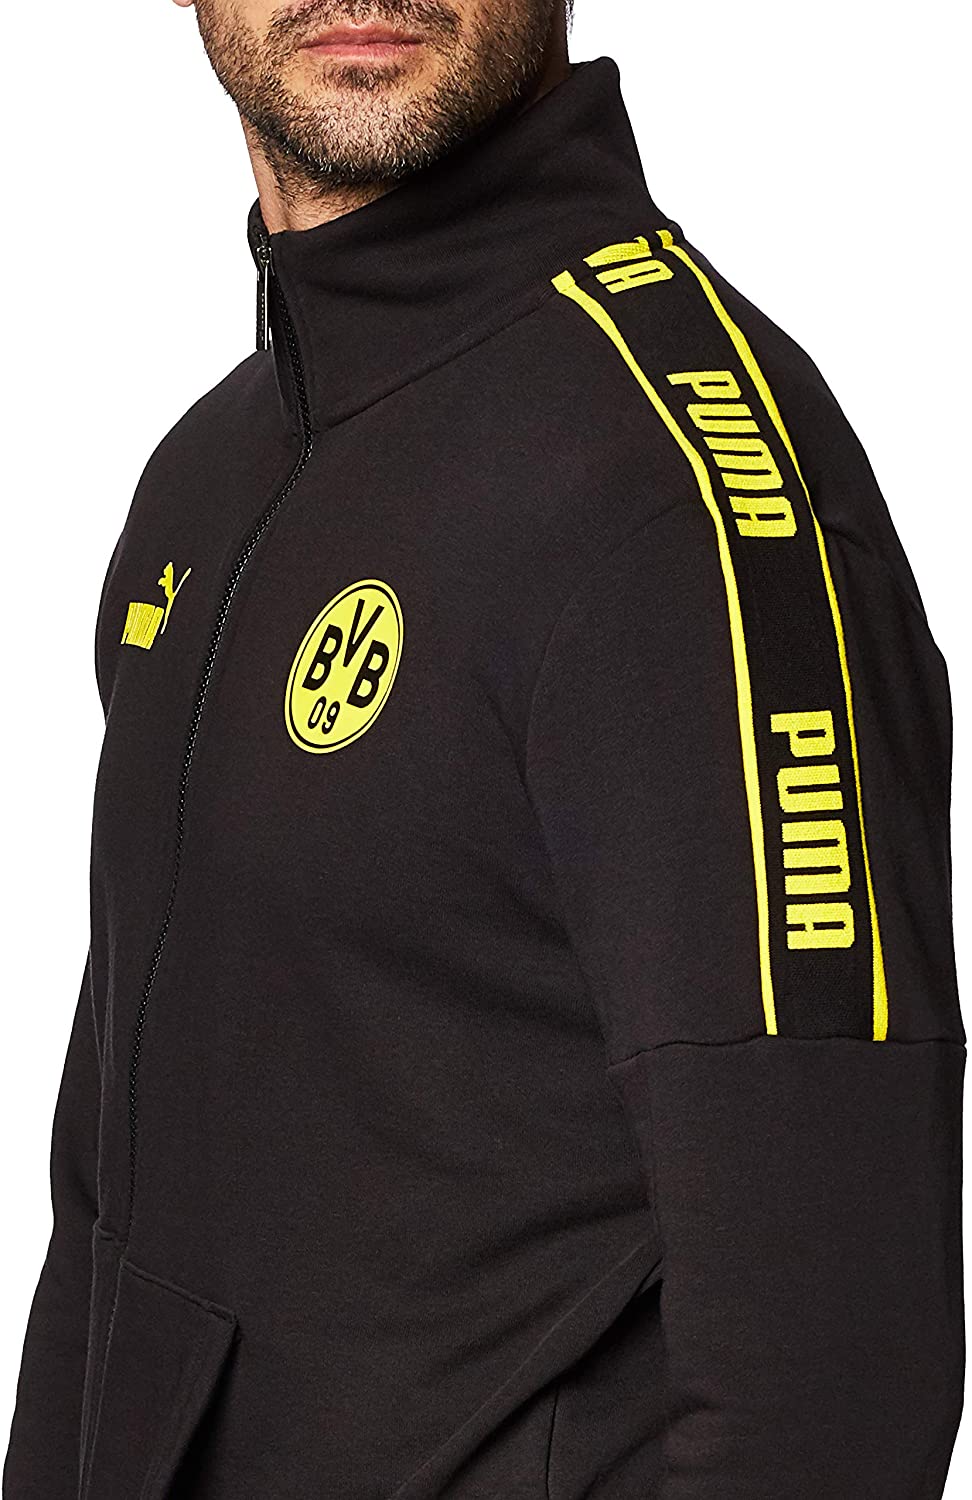 Puma BVB Borussia Dortmund Soccer Club Track Jacket - Black - Men